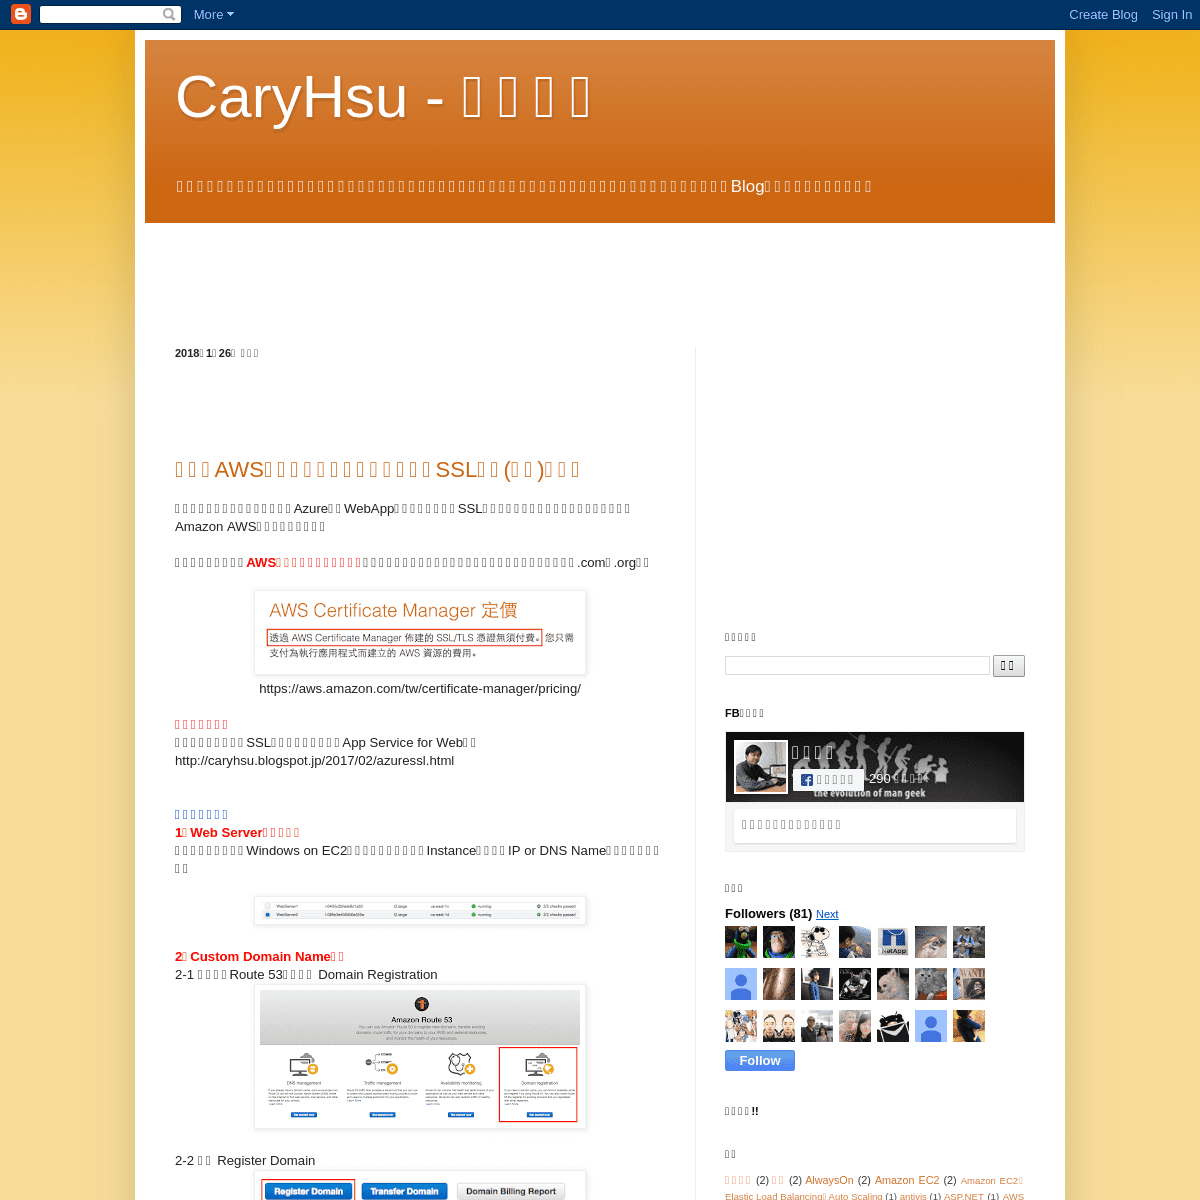 A complete backup of caryhsu.blogspot.com